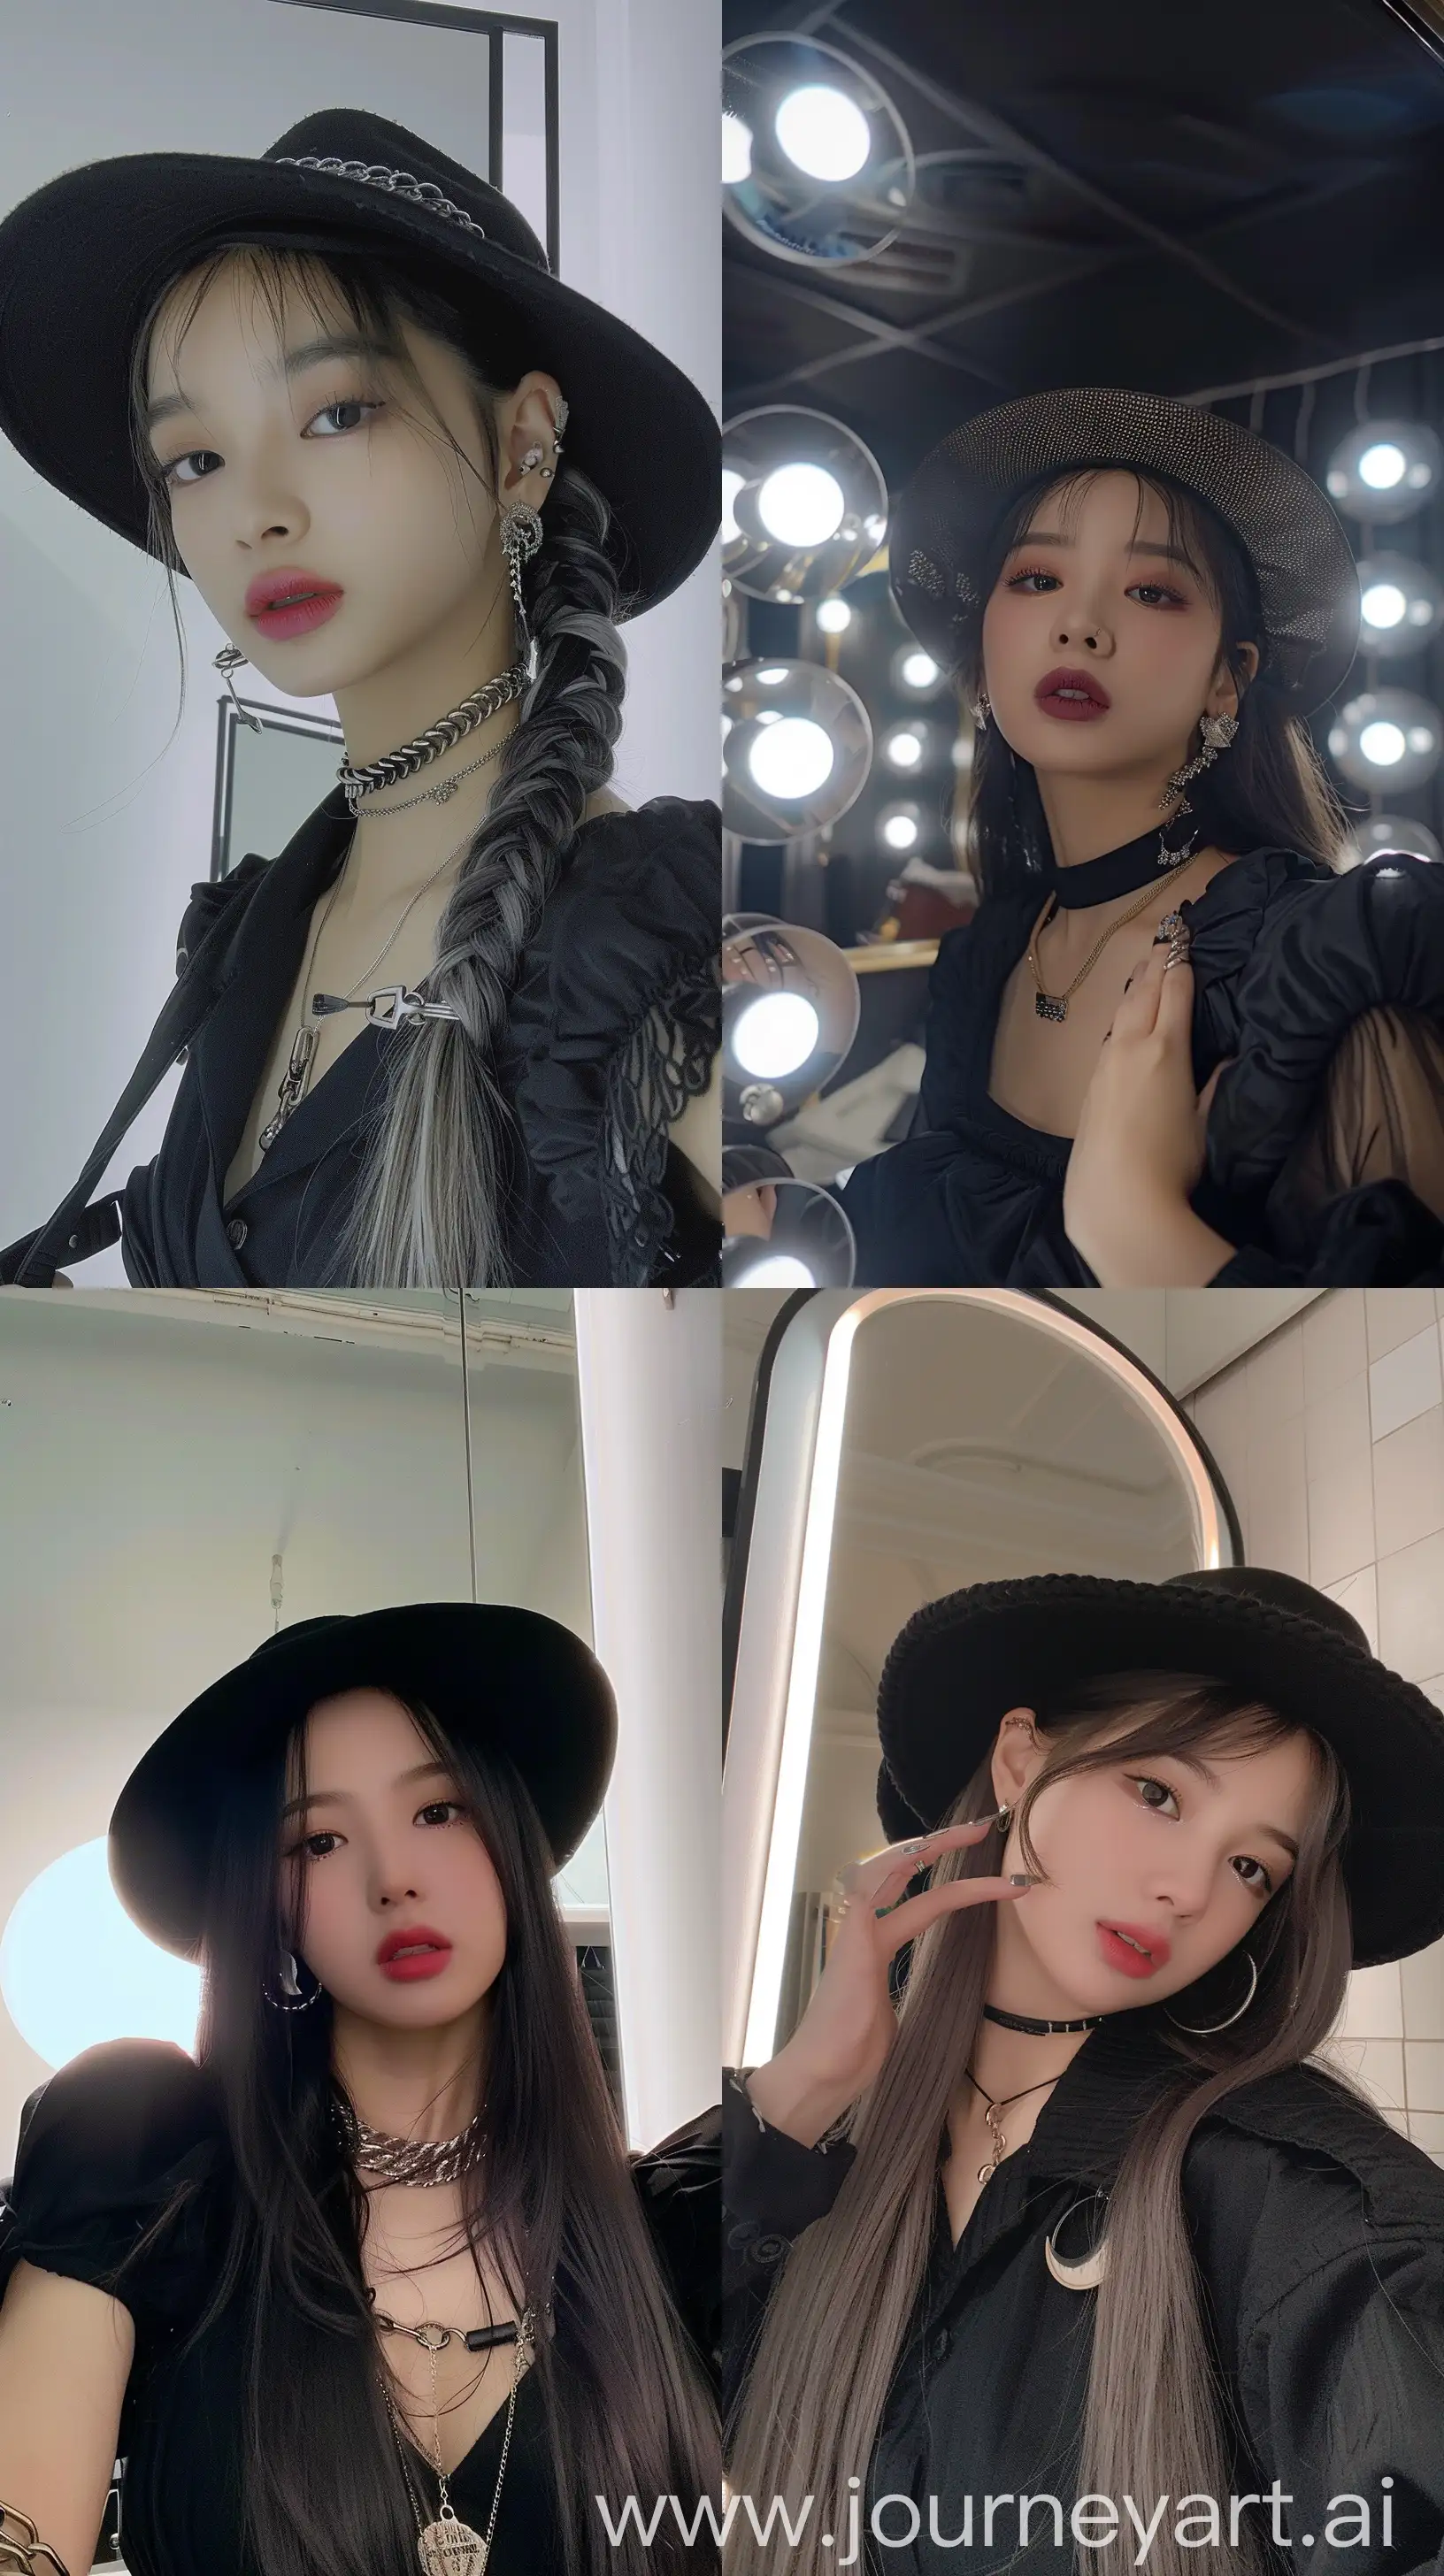 a blackpink's jennie,aestethic mirror selfie, wearing cute black clothes,stylish flathat, aestethic make up --ar 9:16